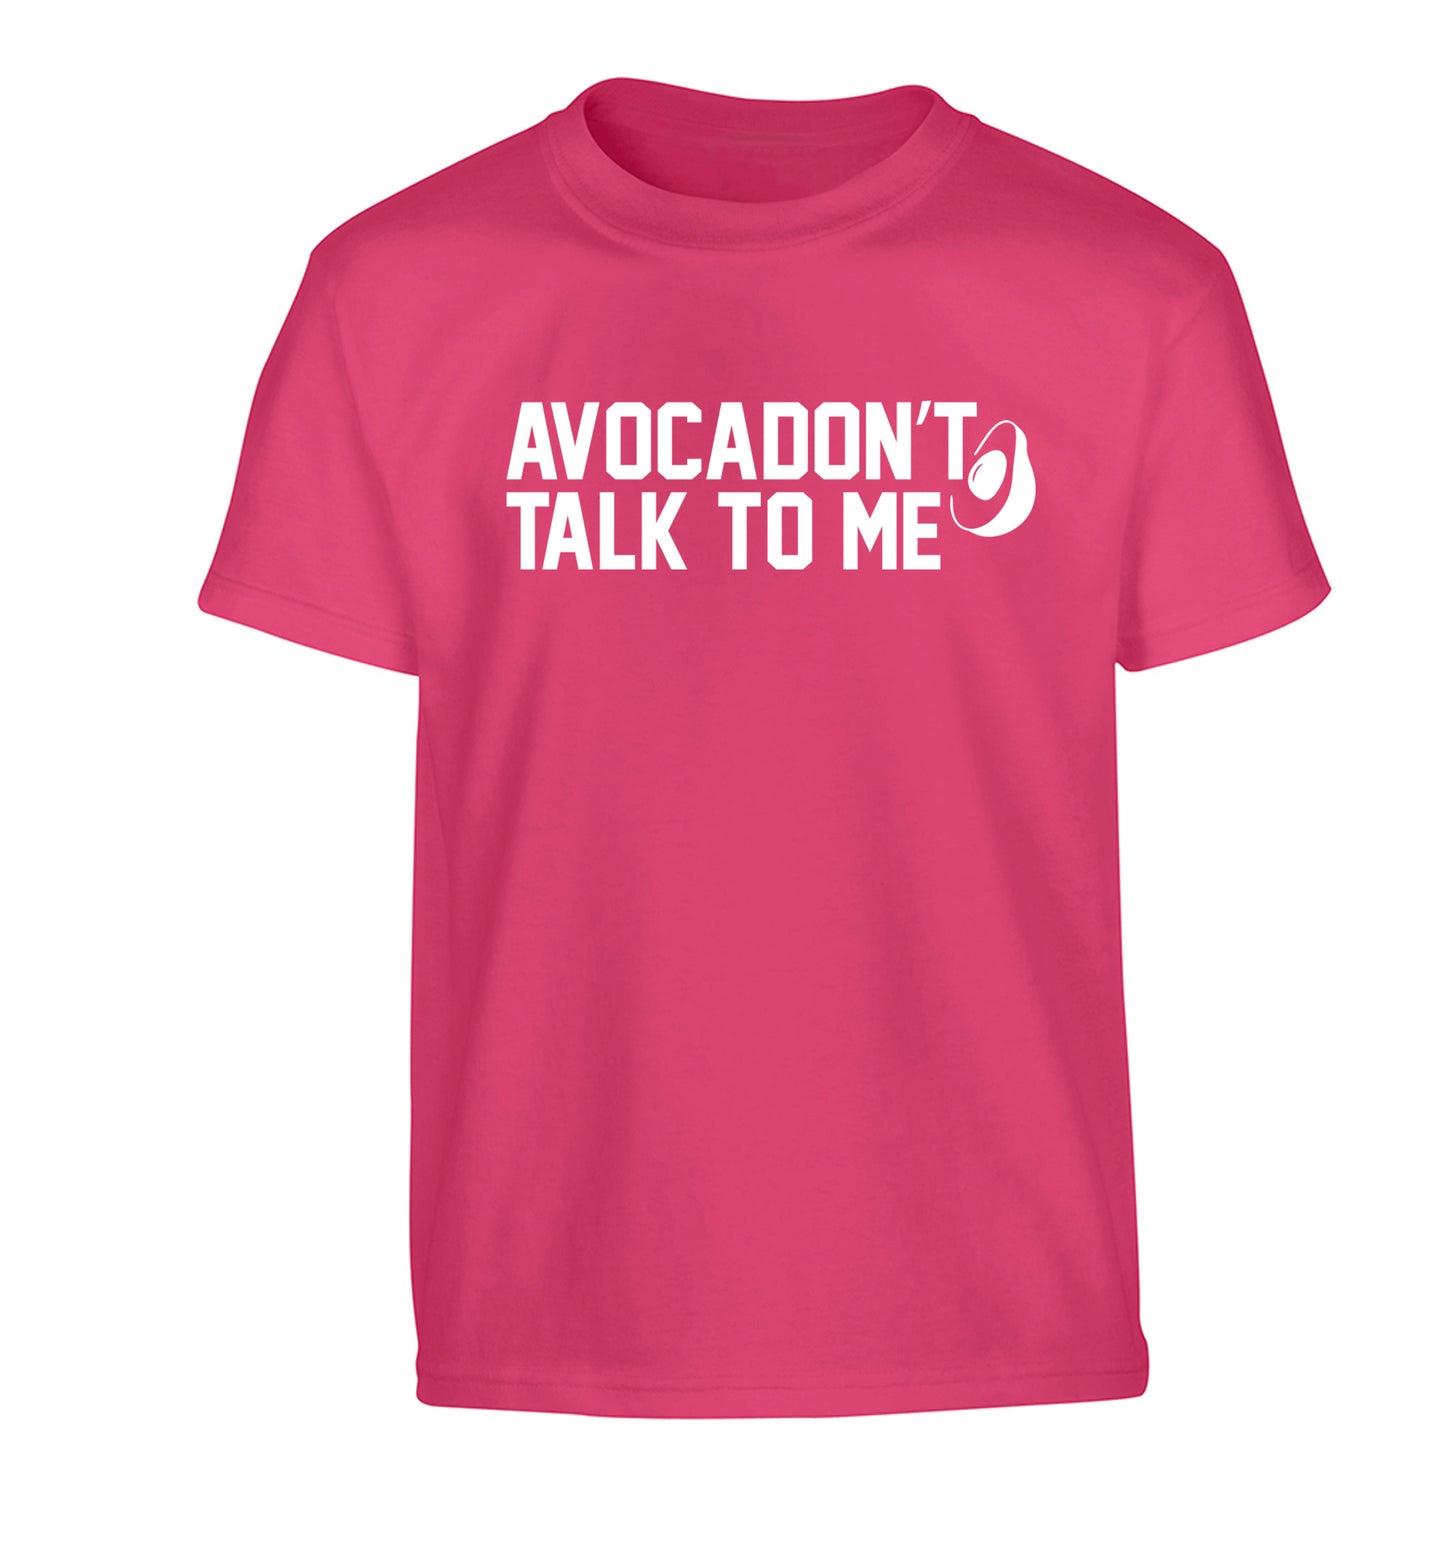 Avocadon't talk to me Children's pink Tshirt 12-14 Years